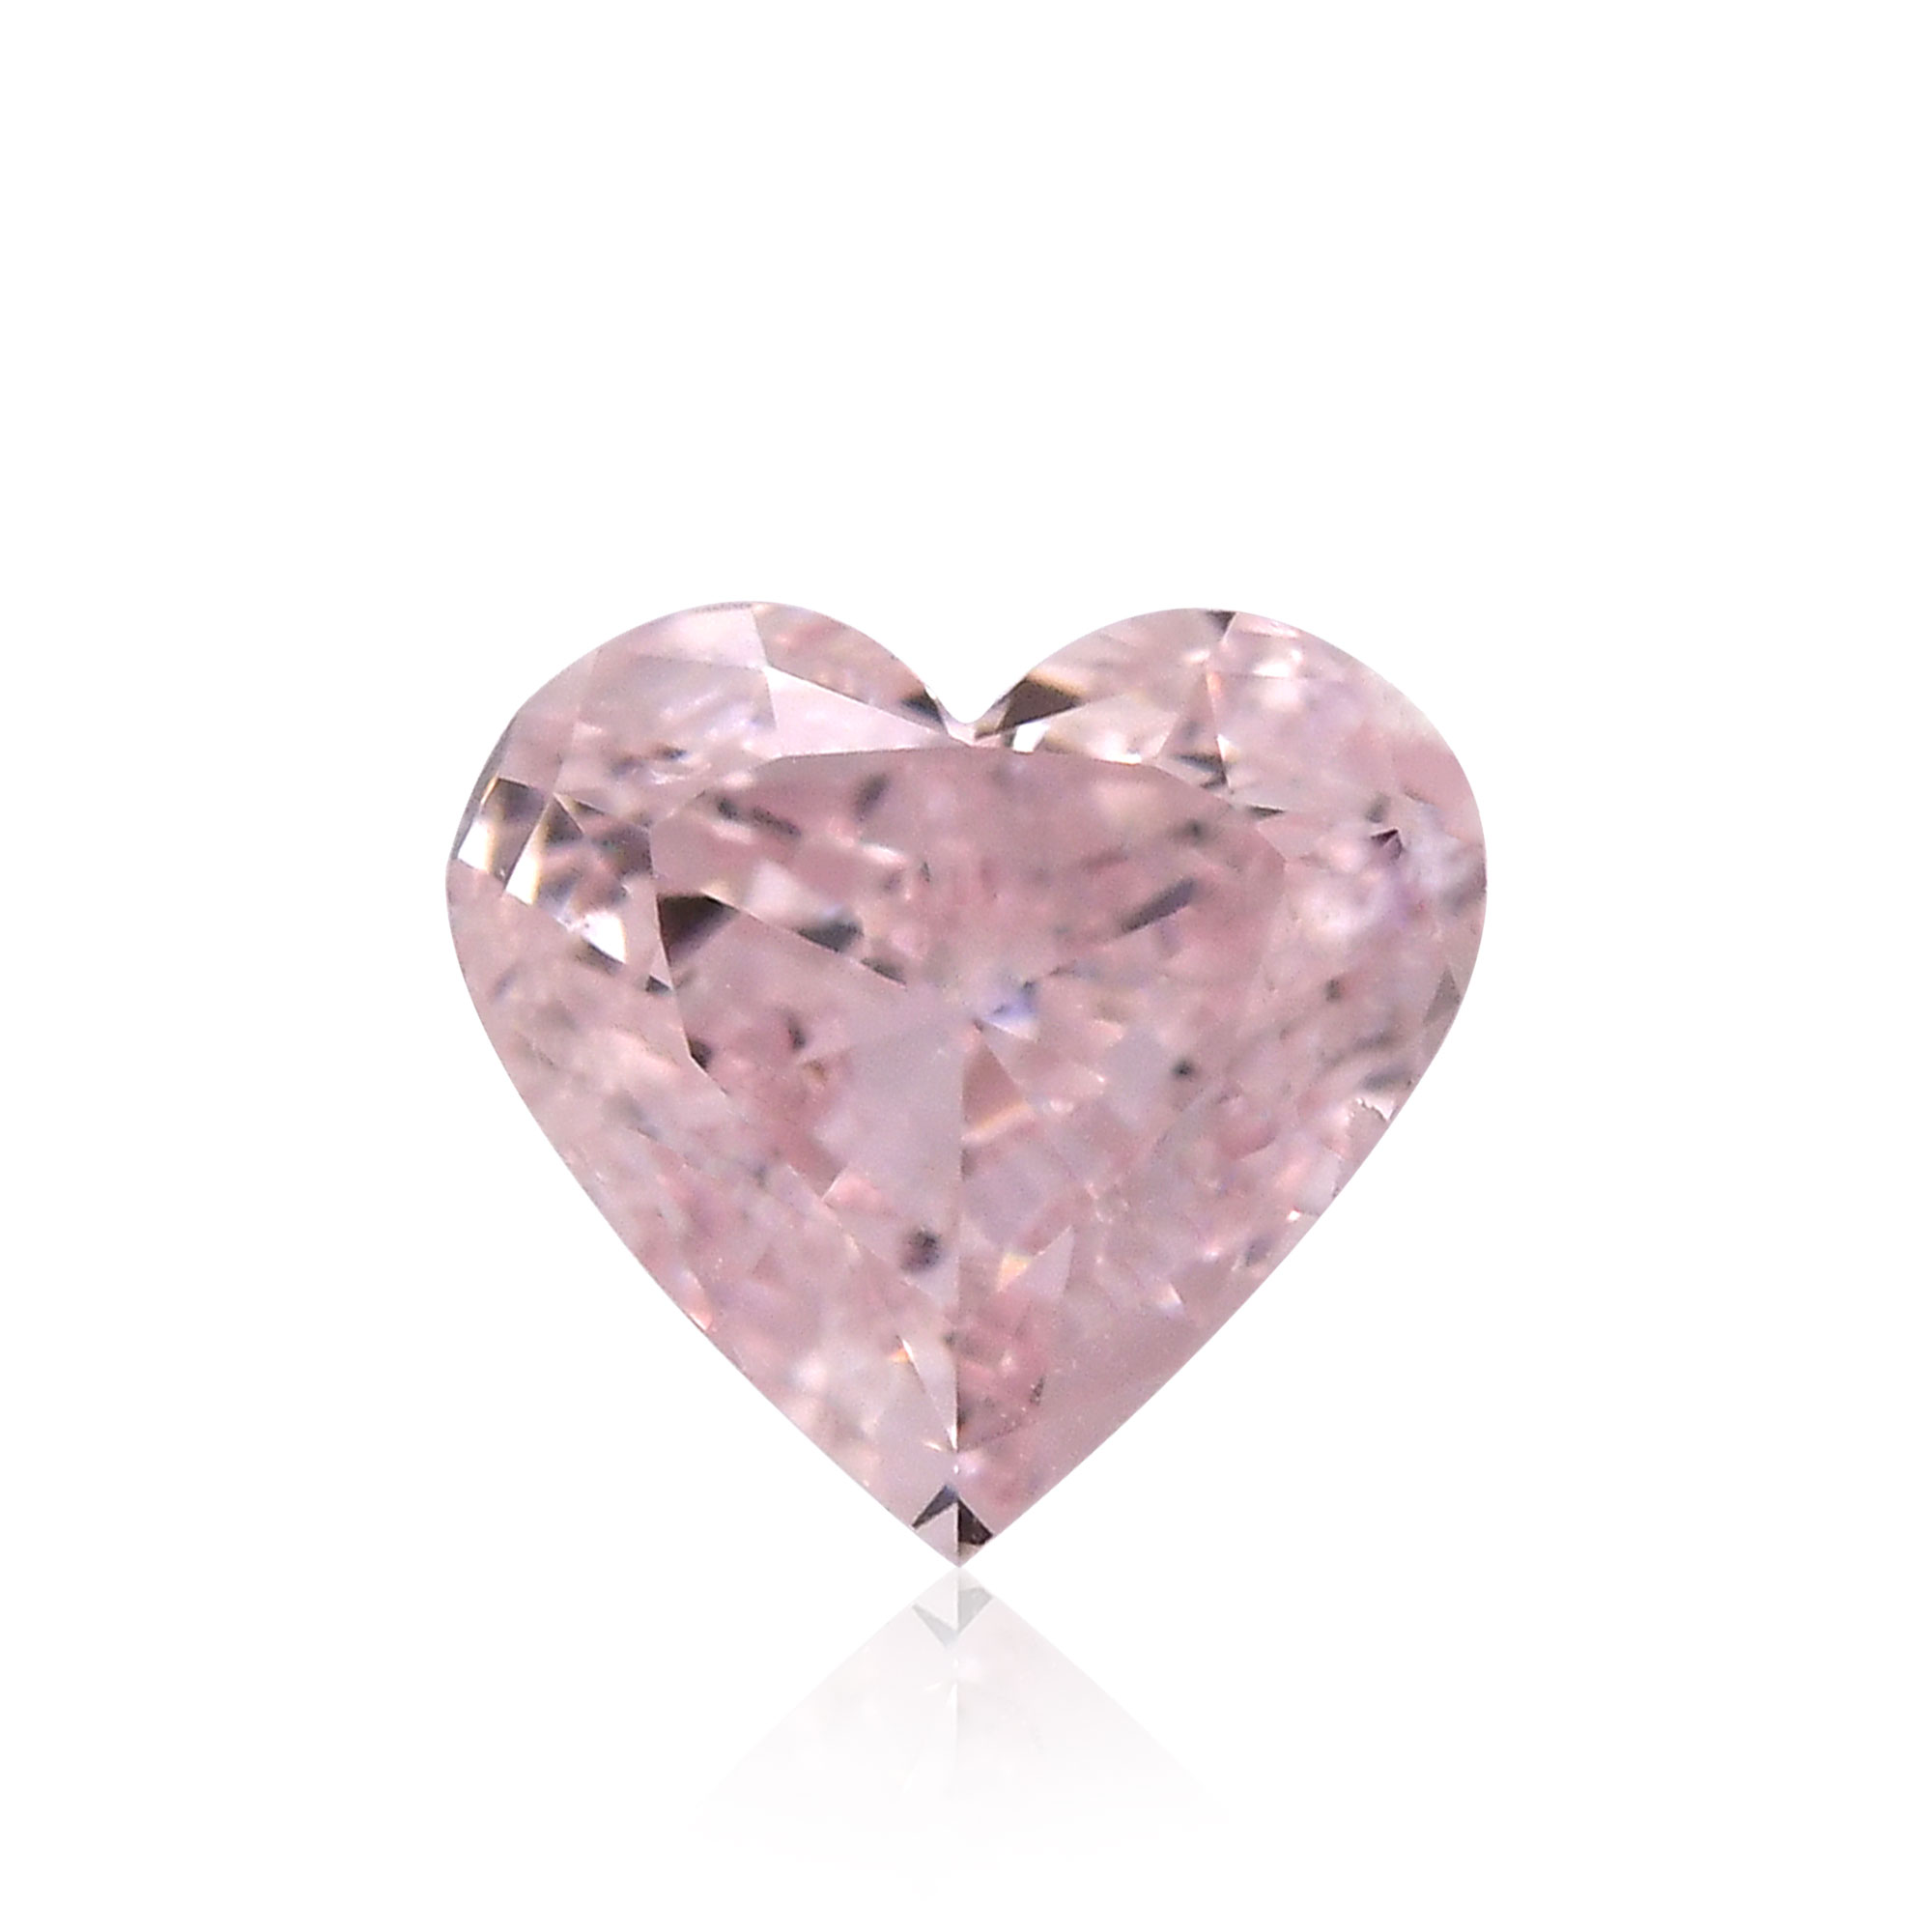 Fancy Light Pink Diamond